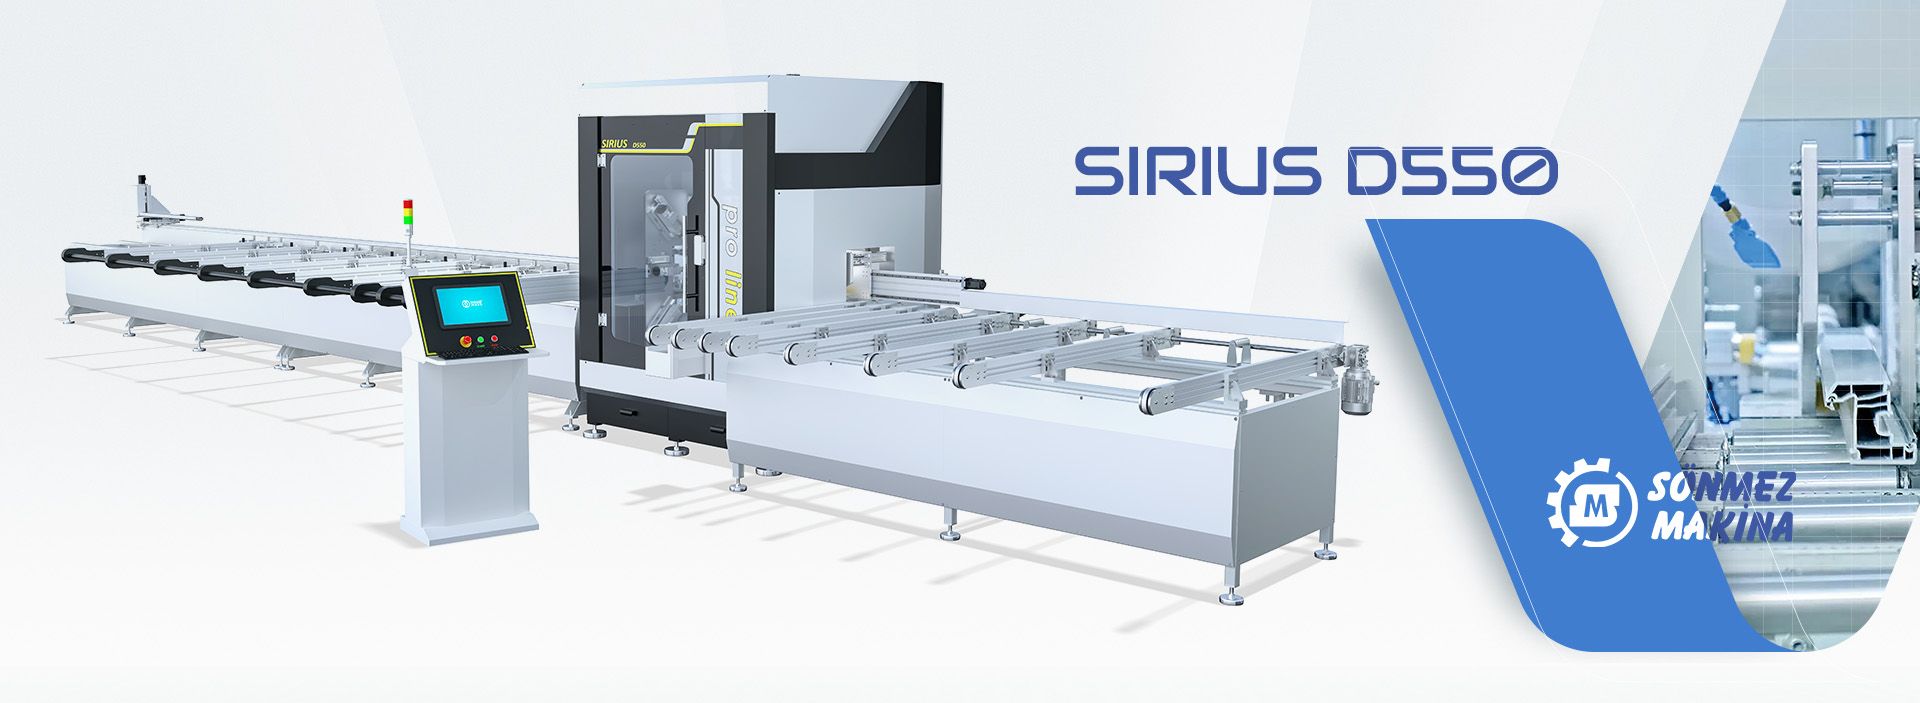 Pvc Profile Machining and Cutting Center SIRIUS D550 SIRIUS D550